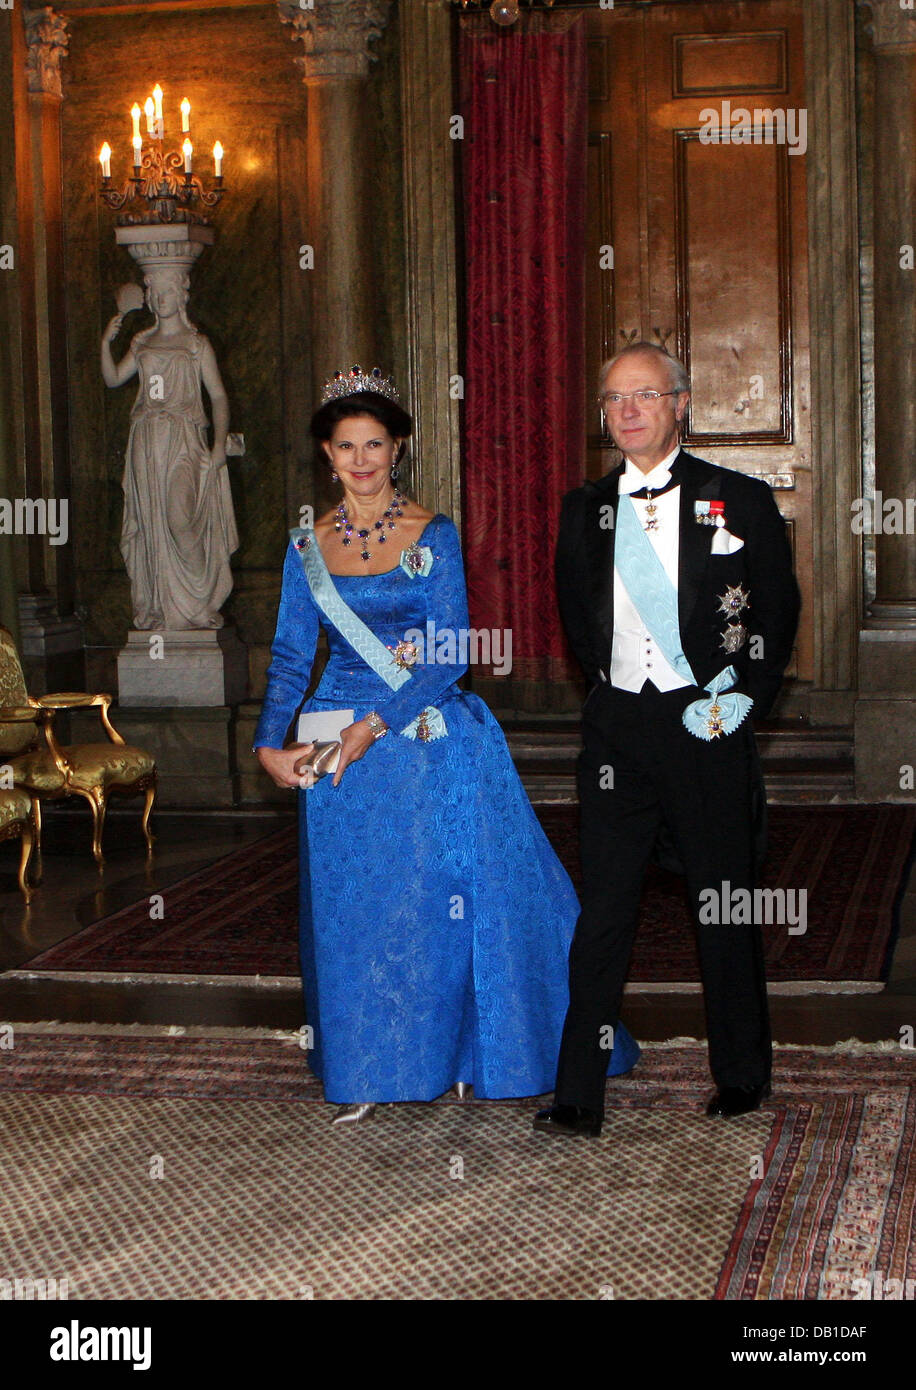 queen-silvia-and-king-carl-gustav-arrive-for-the-gala-dinner-held-DB1DAF.jpg